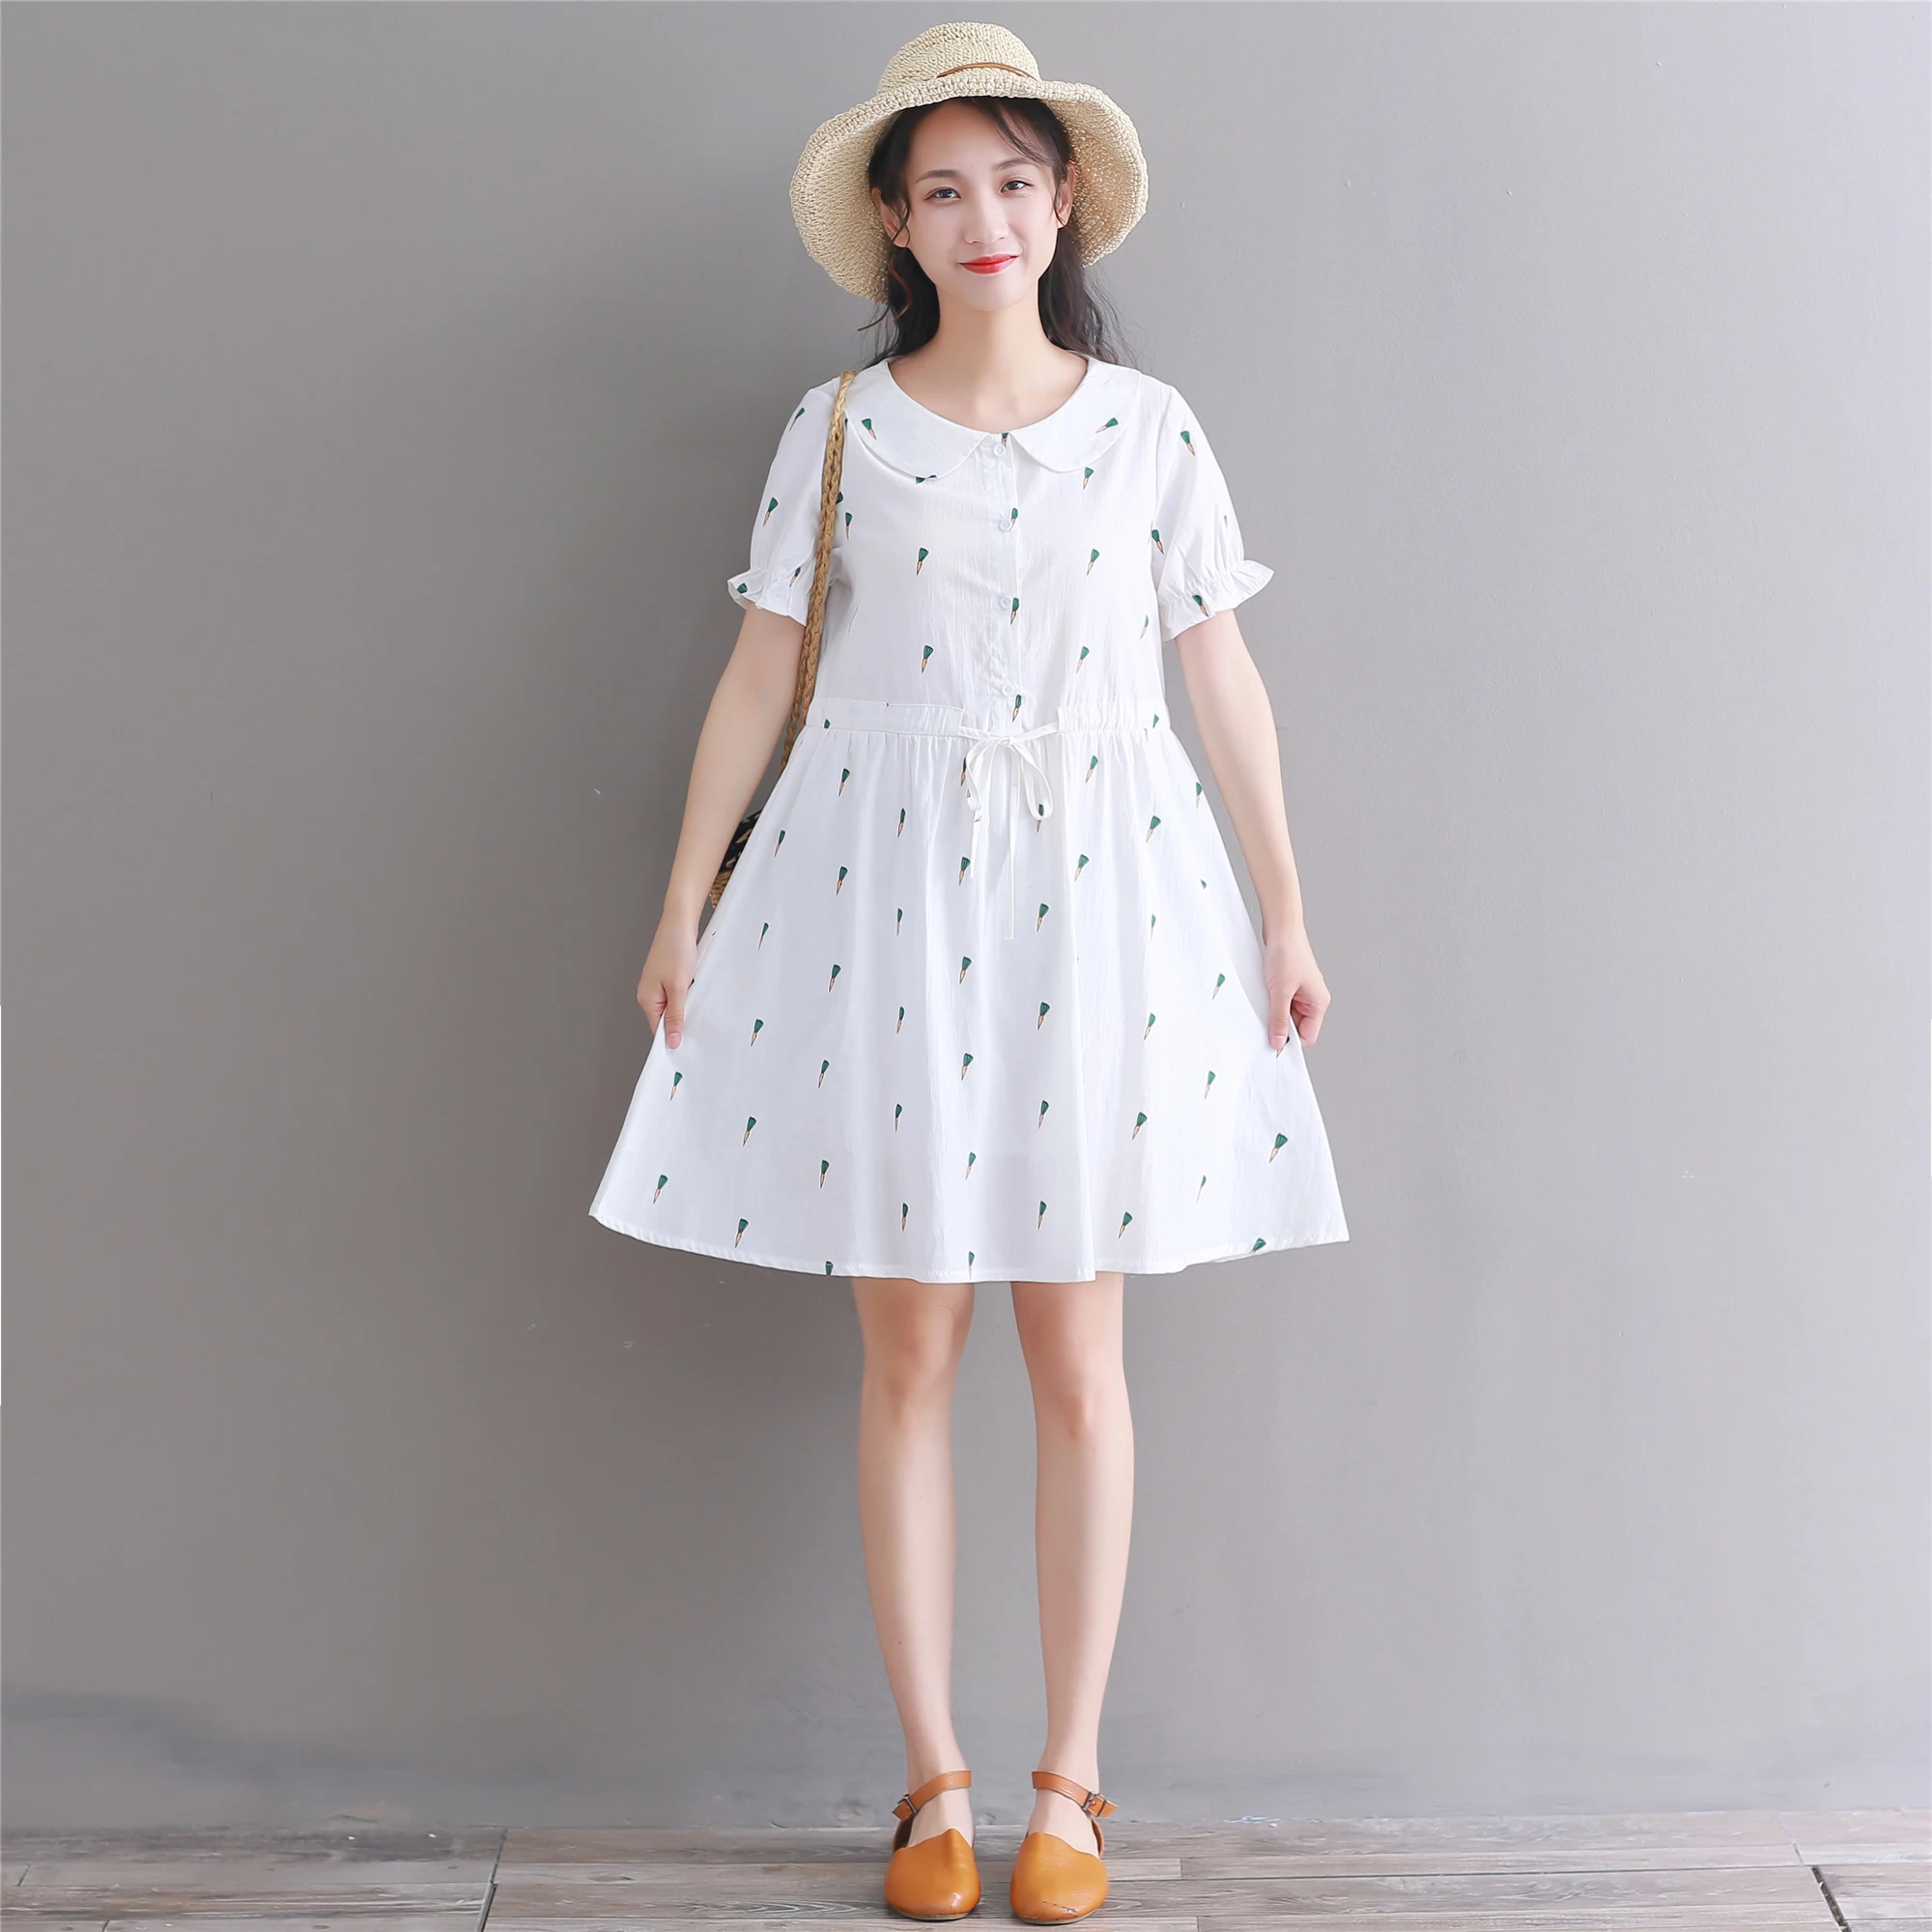 Mori girl-vestido de algodón con estampado de peter pan Para chica, ropa de moda de verano, estilo kawaii, 2019